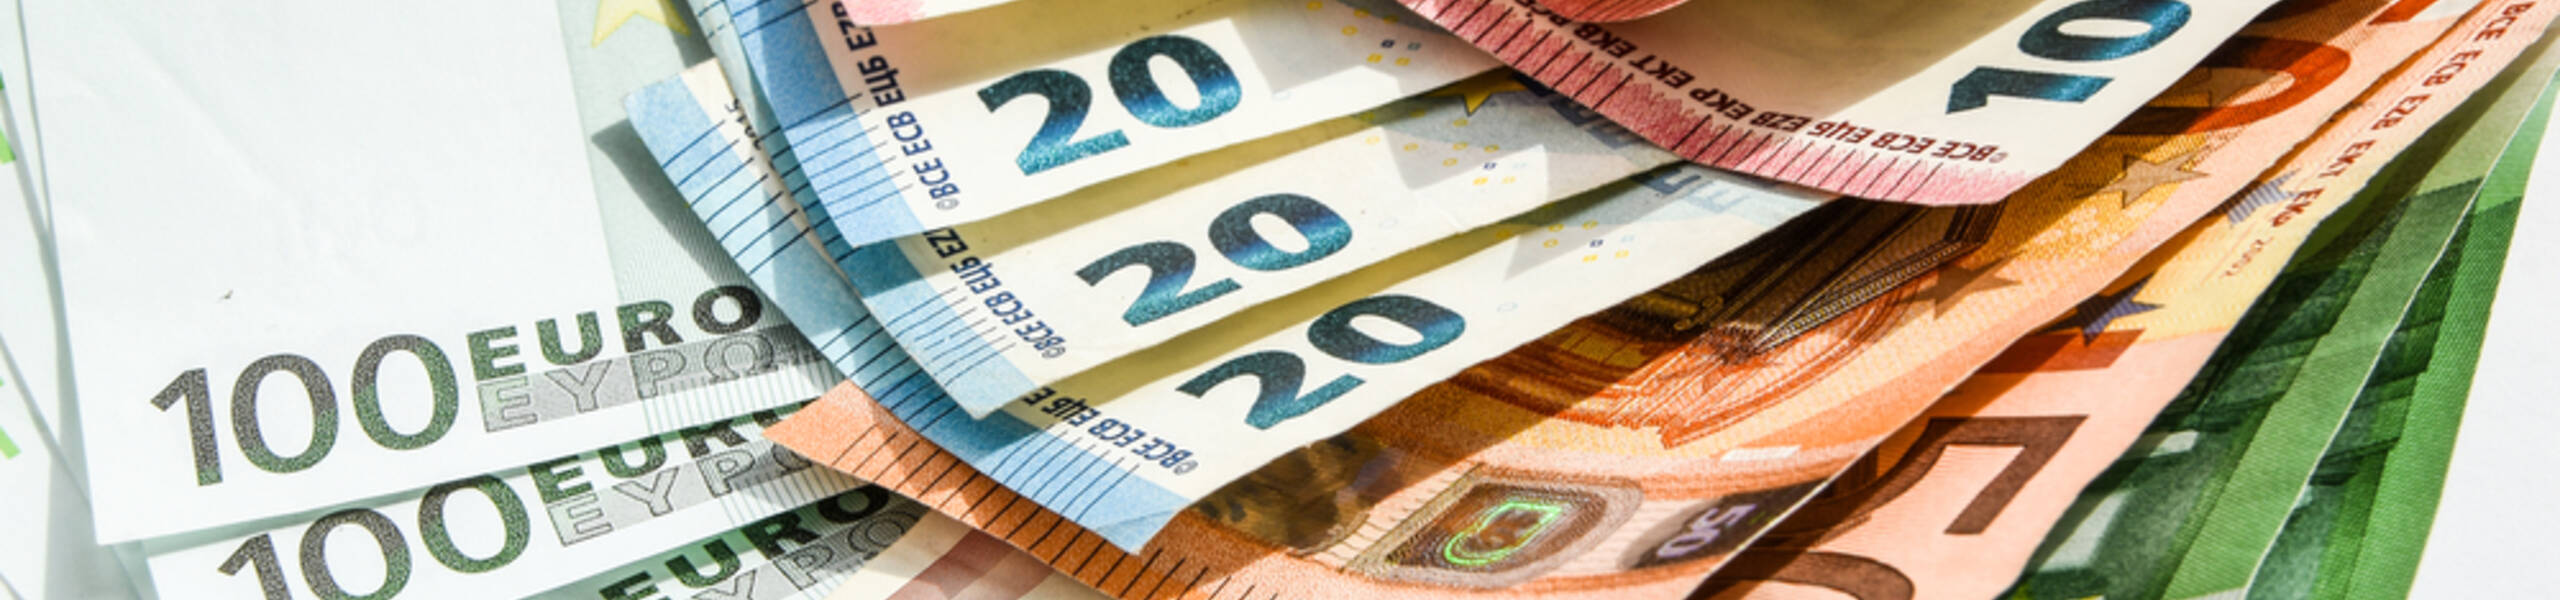 EUR/USD closer to 1.2000 area